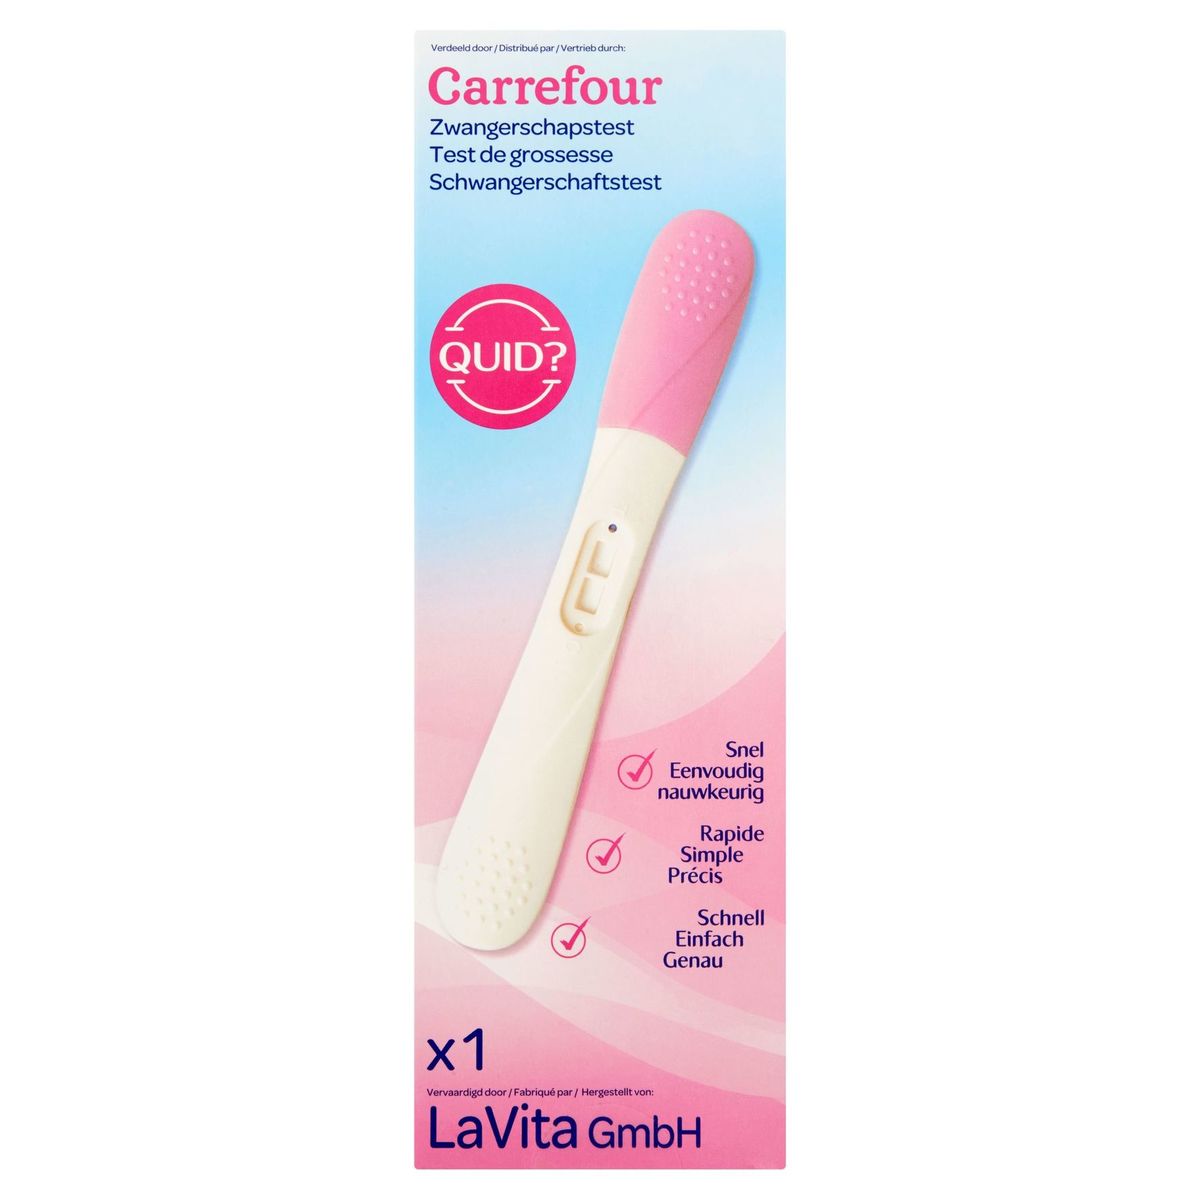 Carrefour Zwangerschapstest Quid?